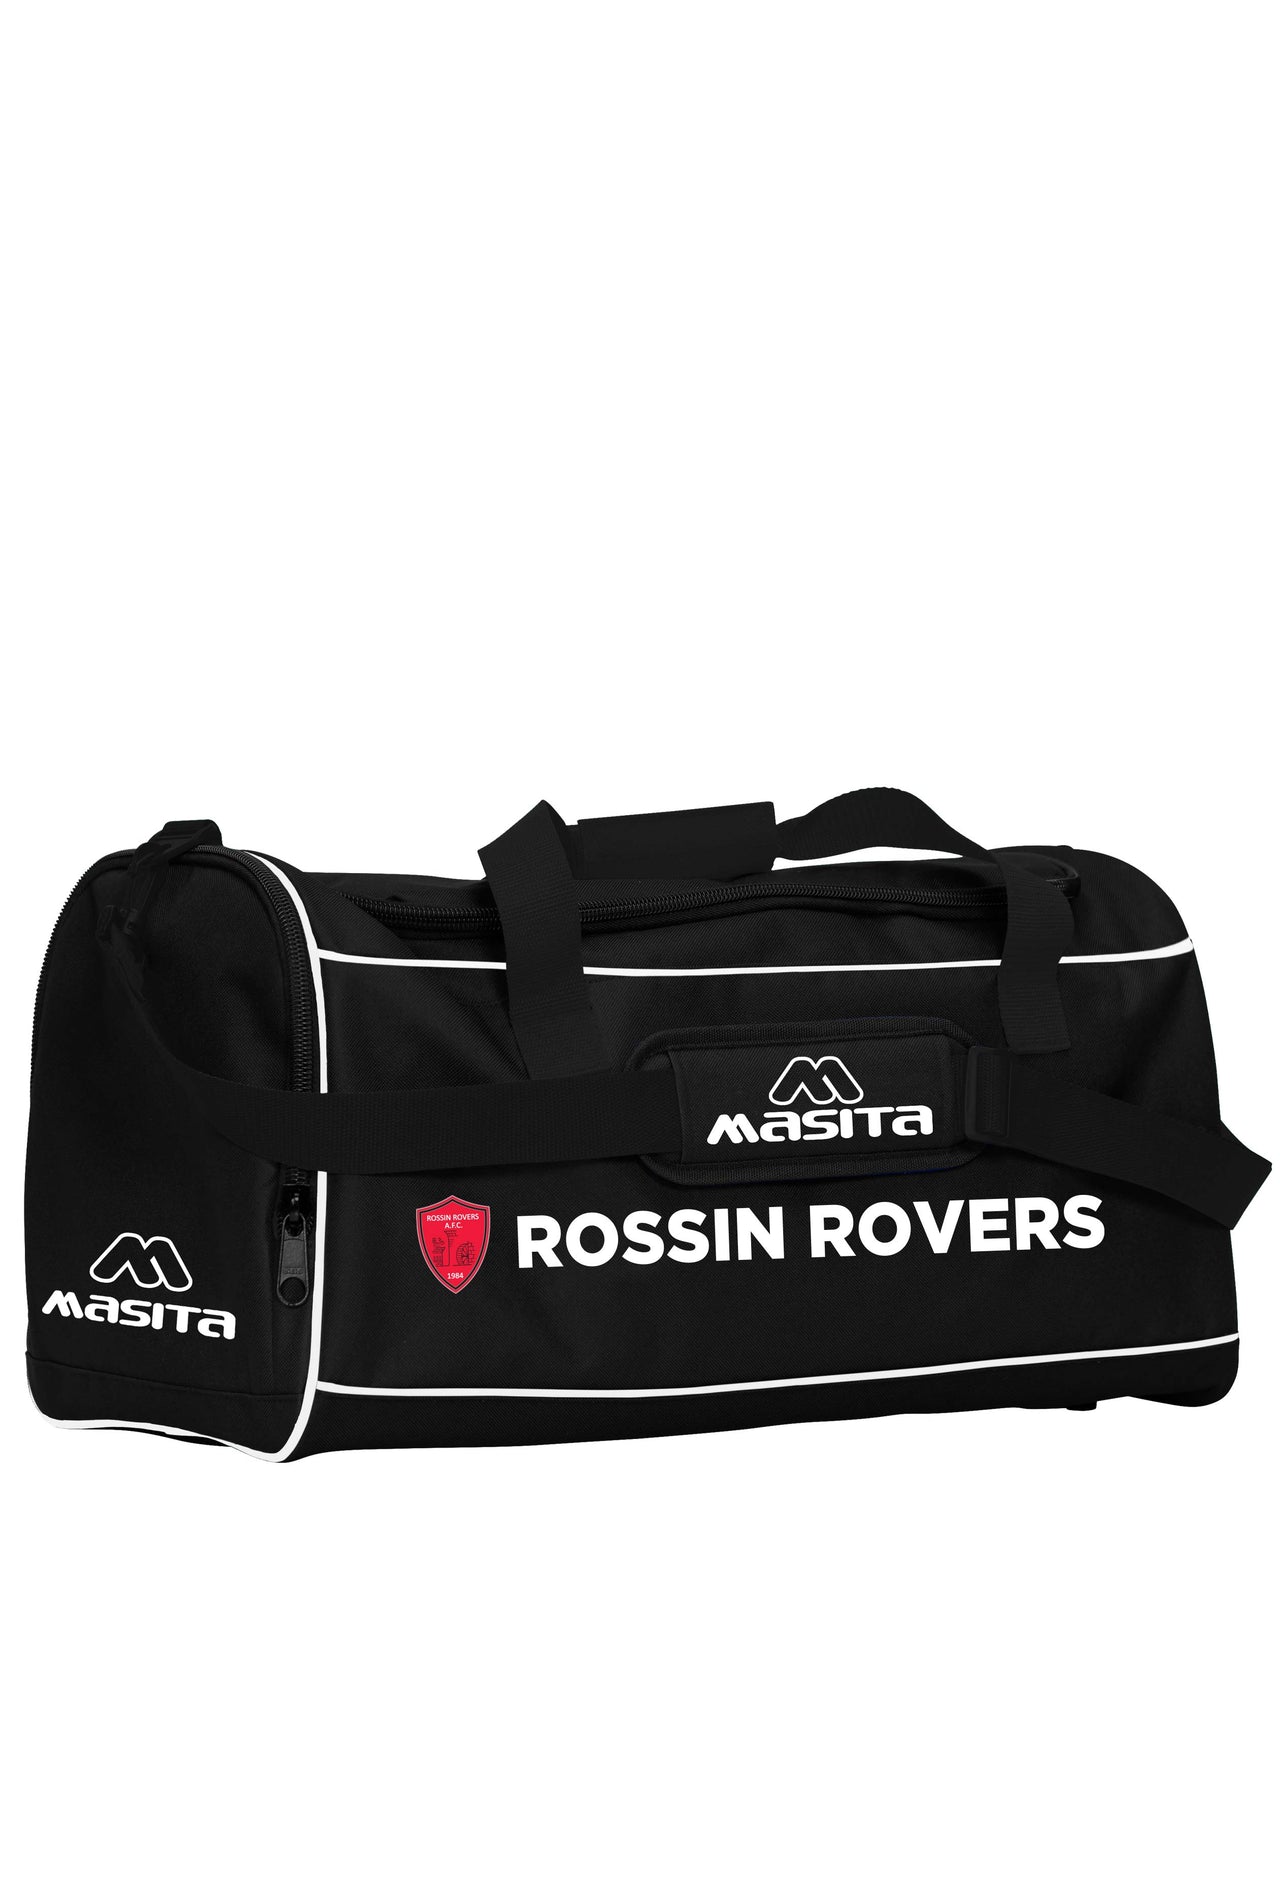 Rossin Rovers AFC Forza Bag Medium